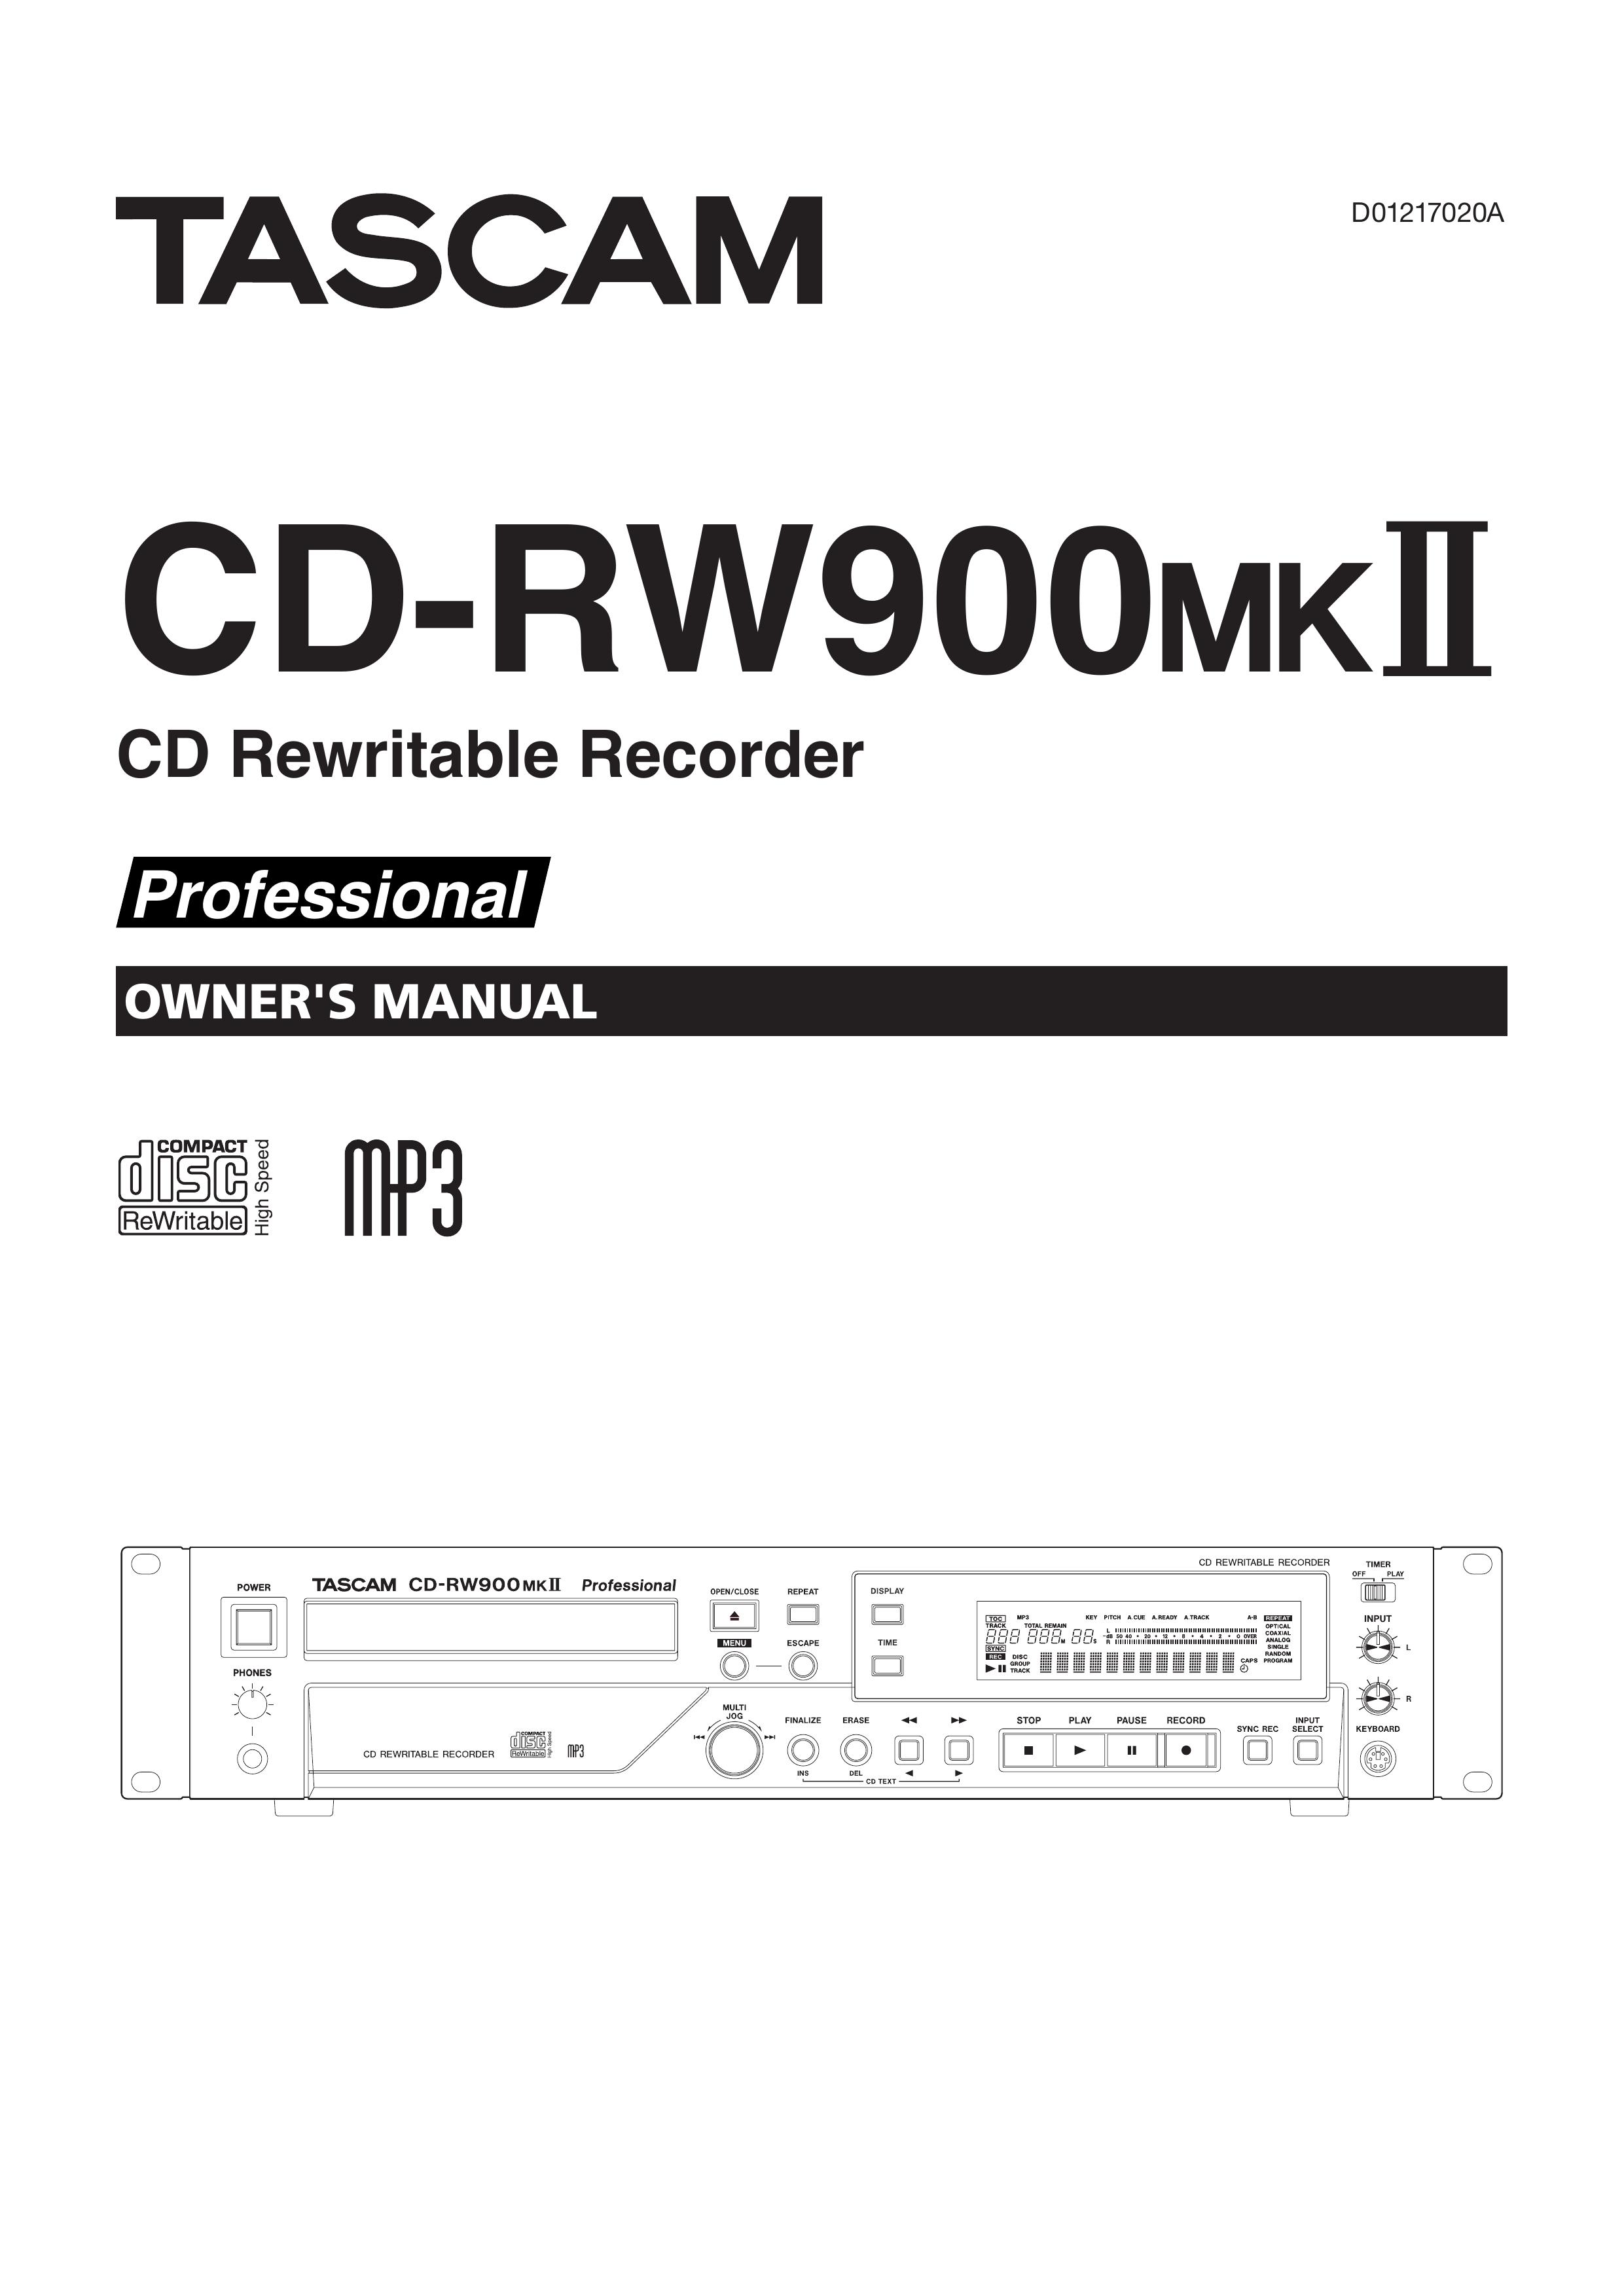 Tascam cd-rw900mkII Blower User Manual